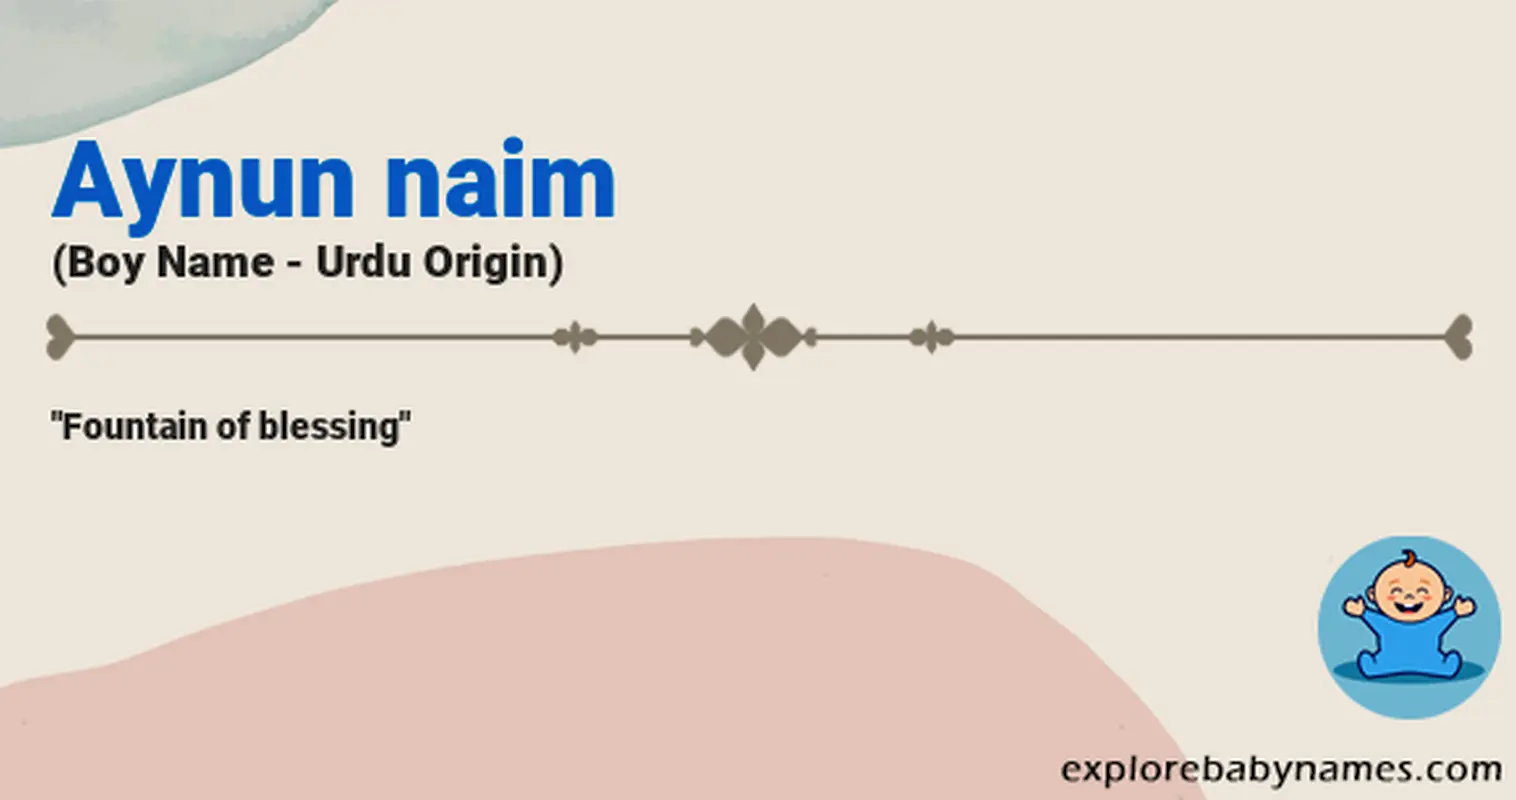 Meaning of Aynun naim